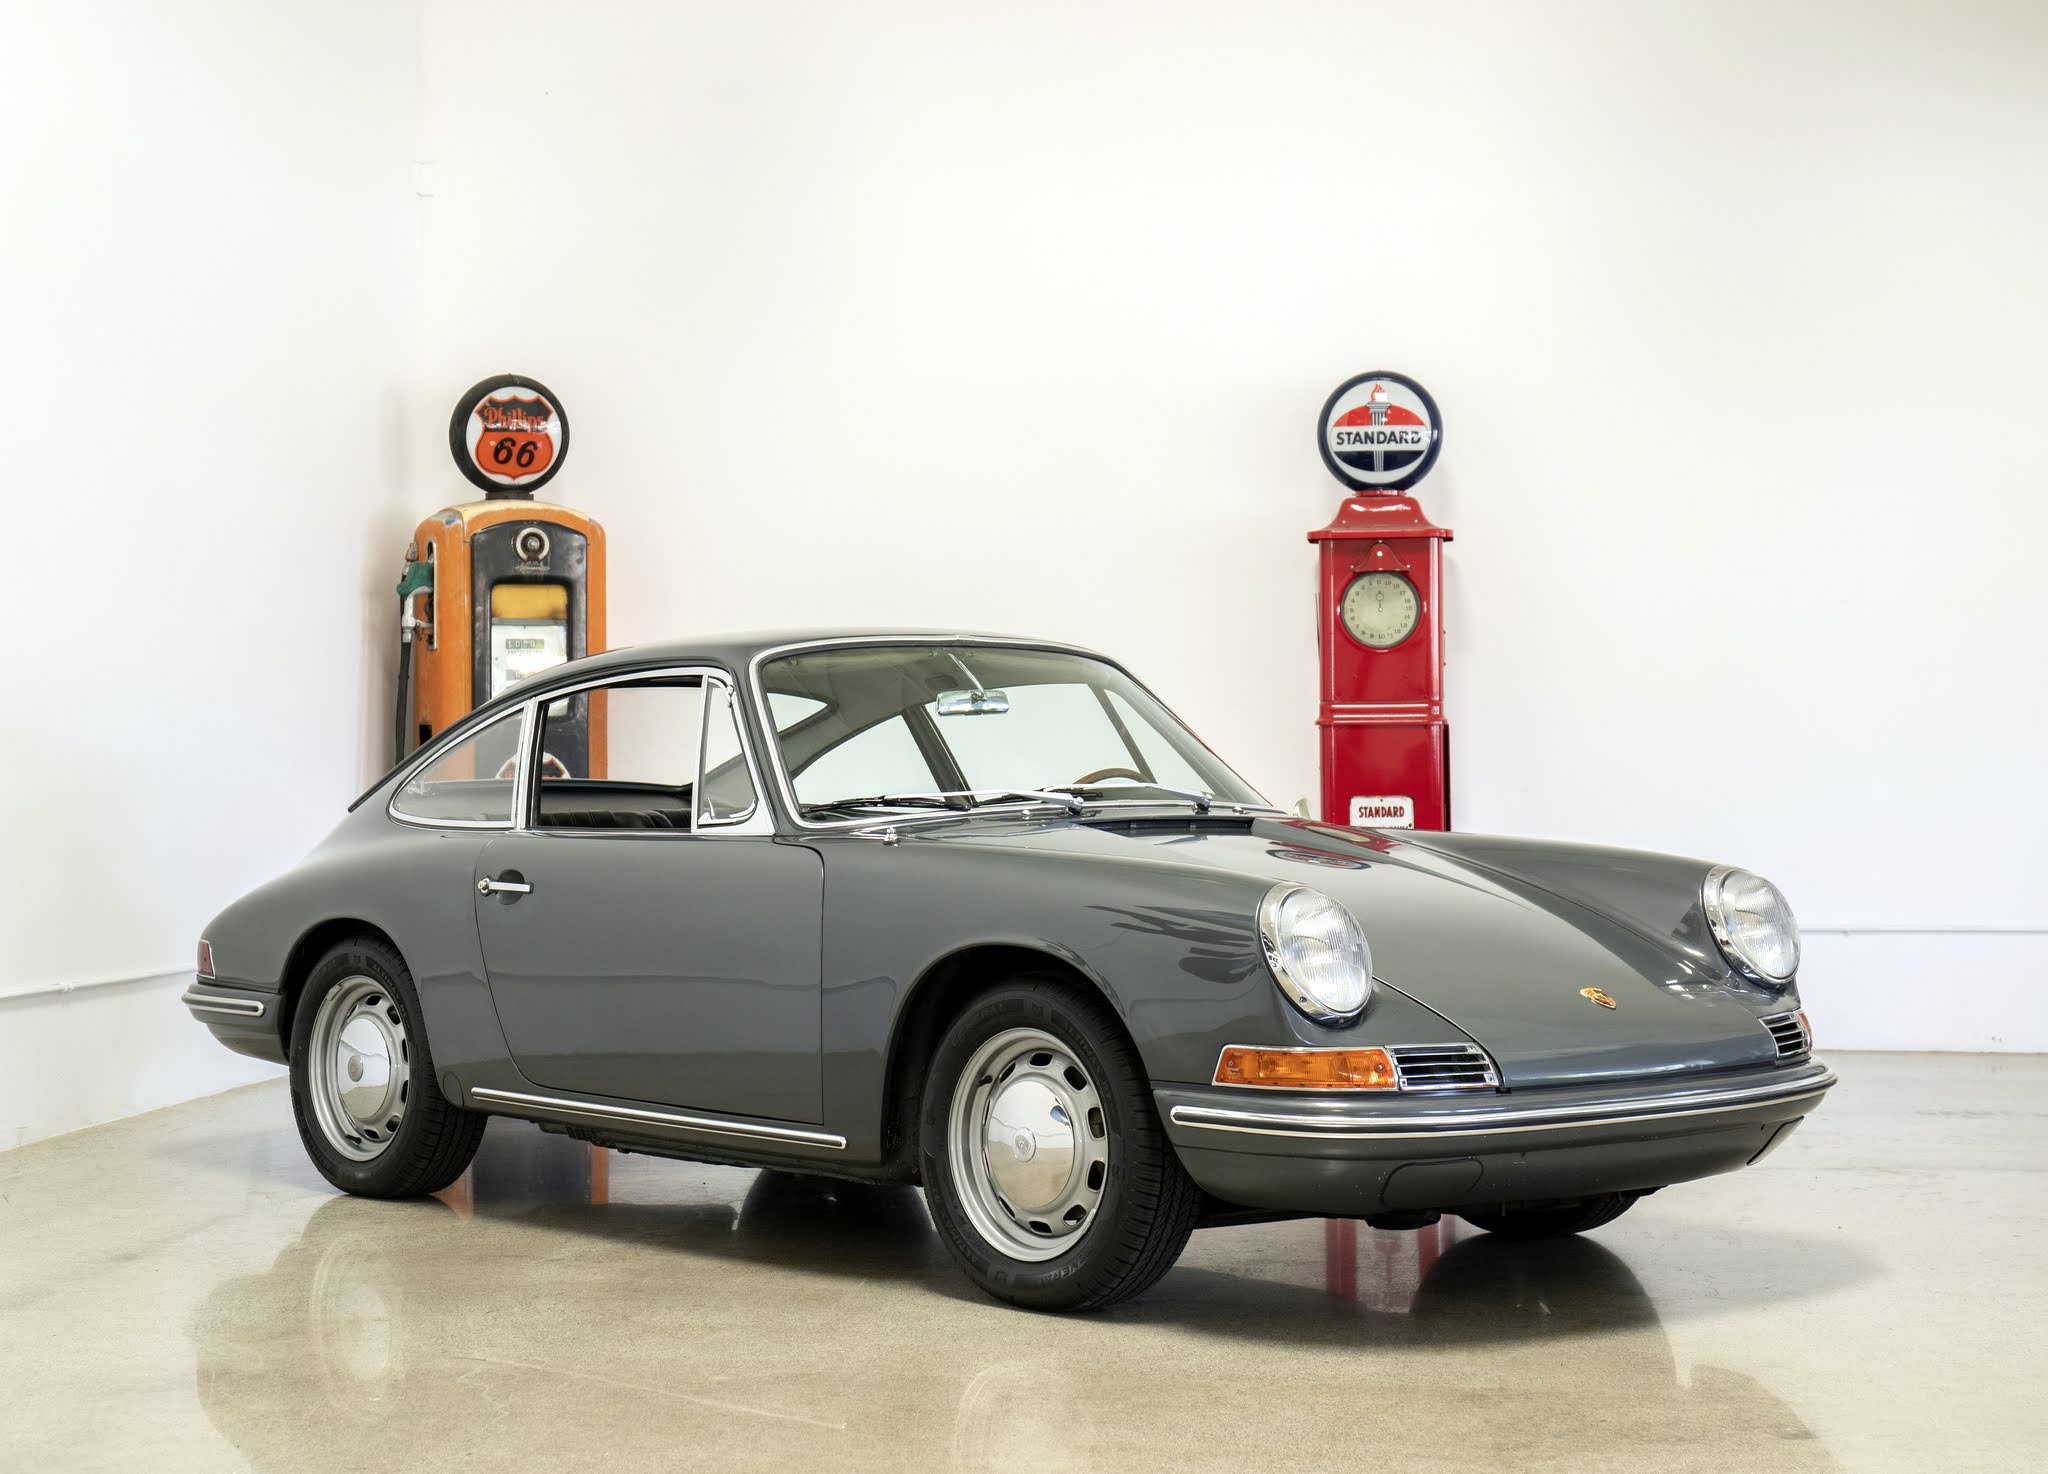 1965 Porsche 911 Coupe for sale - price, value, cost